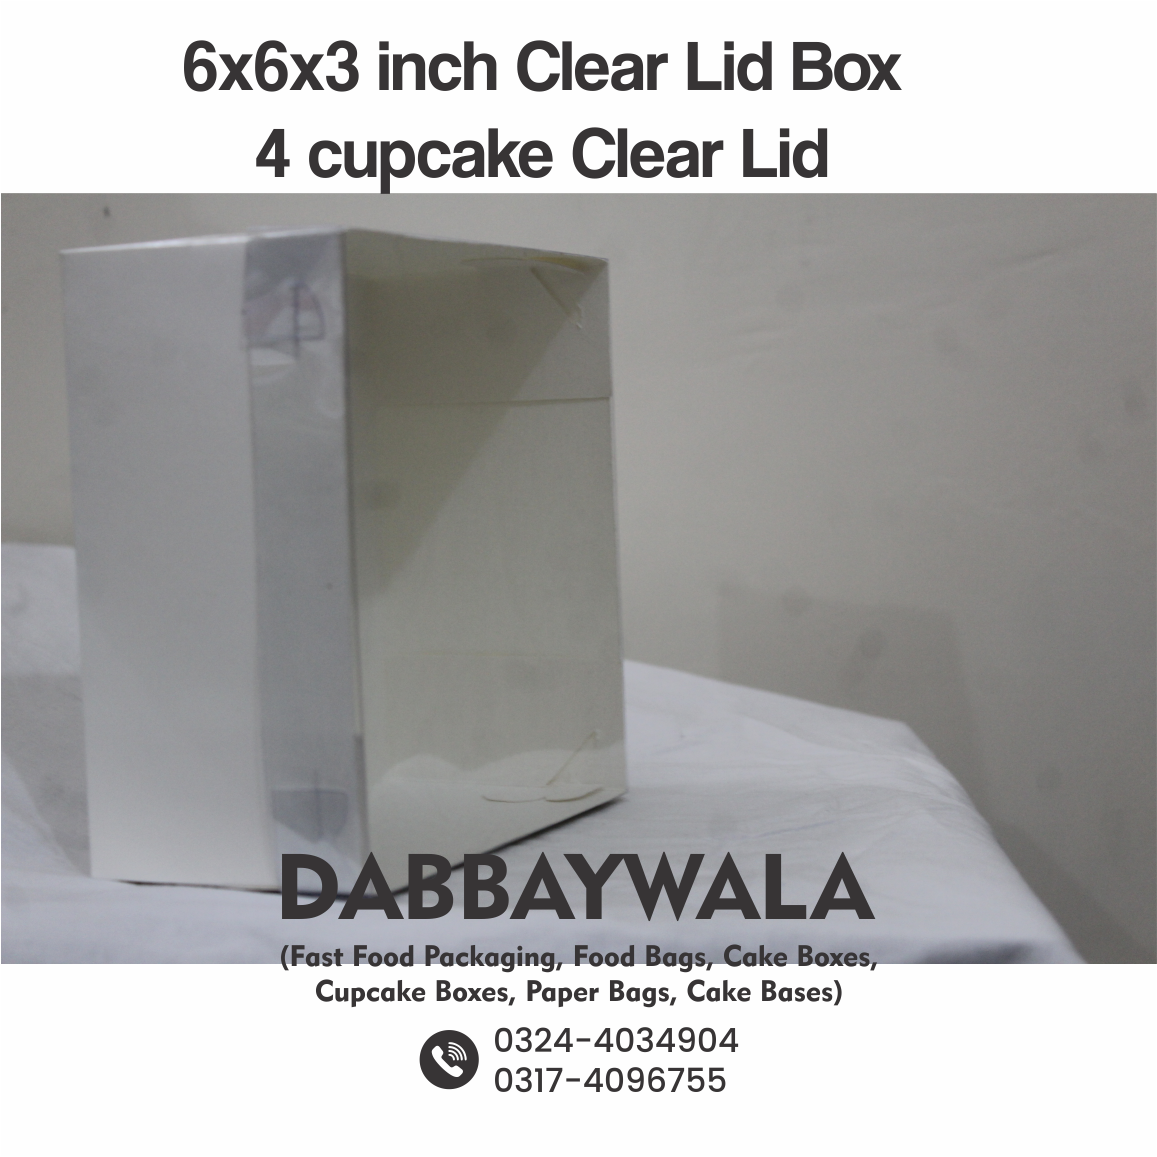 6x6x3 inch - 4 Cupcake Box